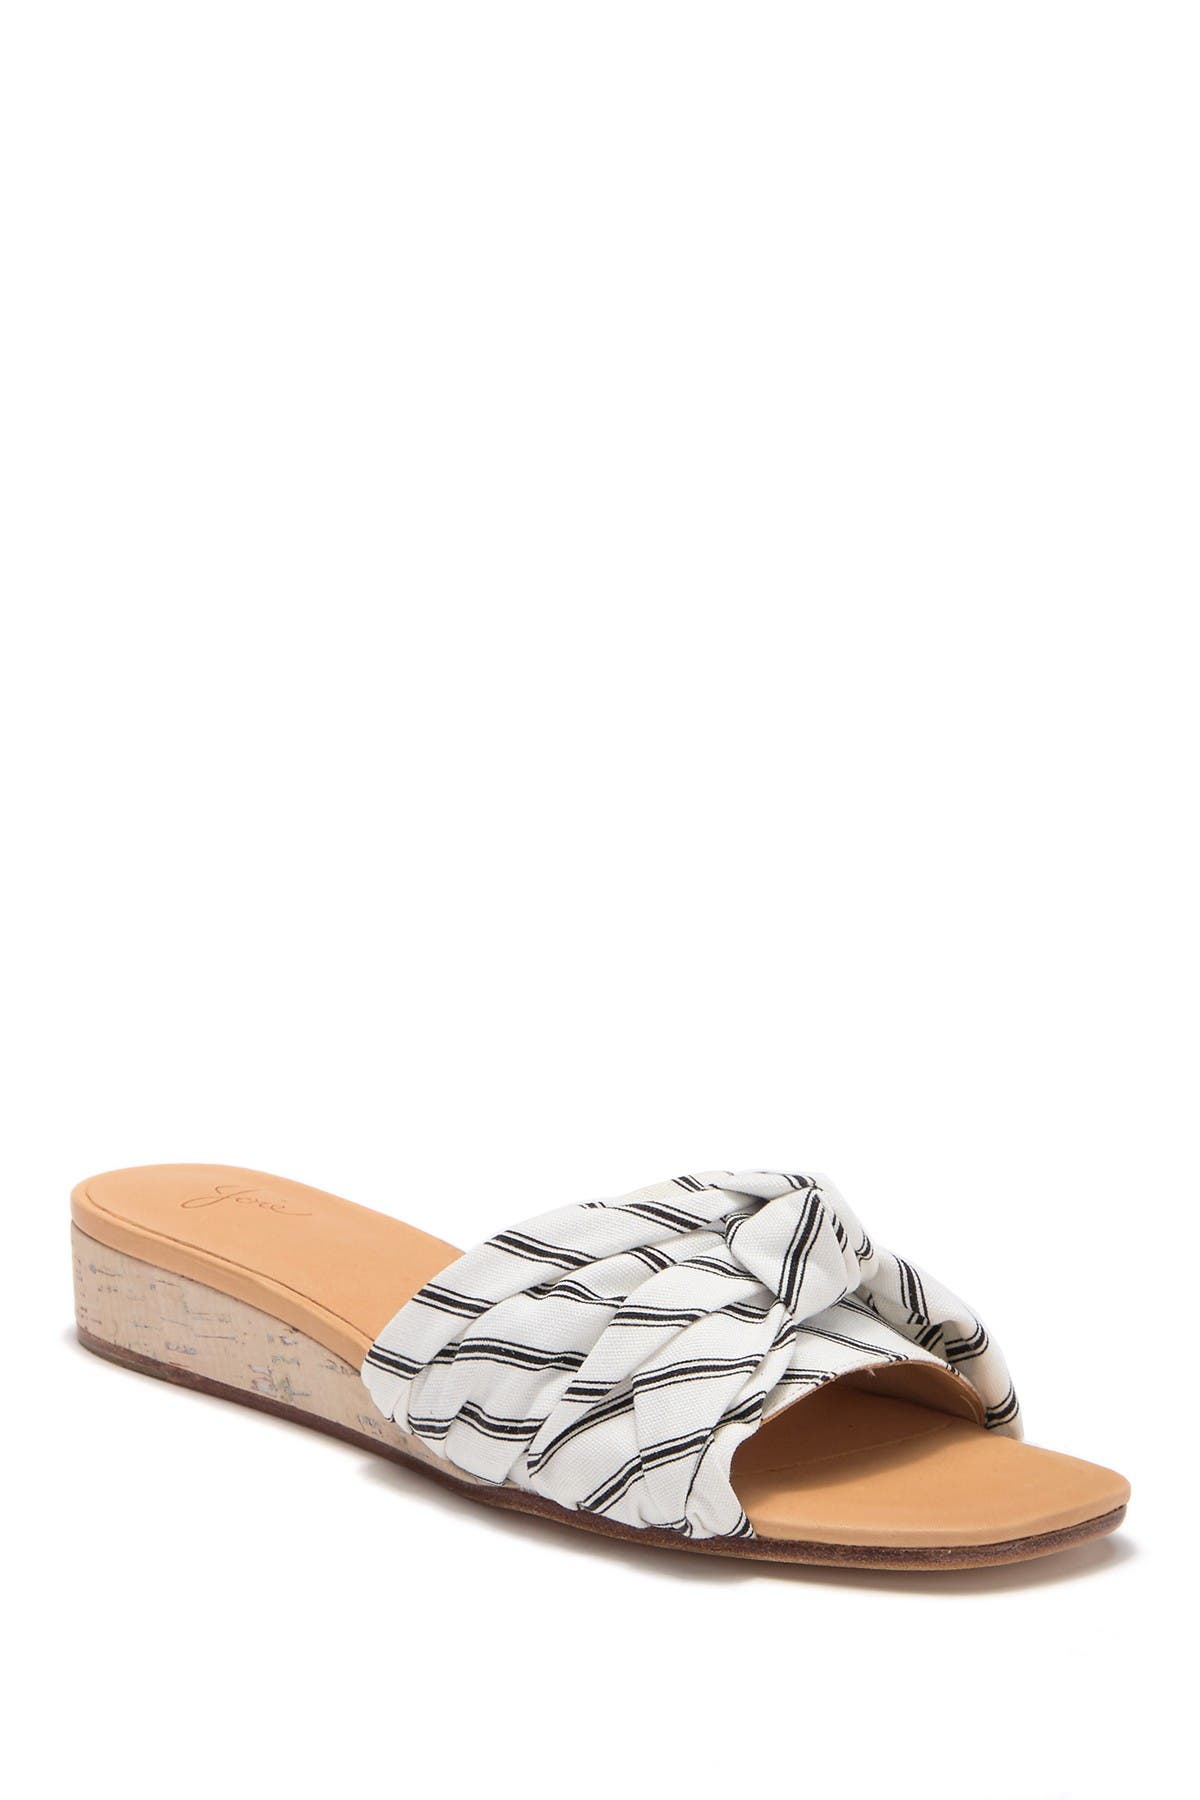 Joie | Fabrizia Slide Wedge Sandal 